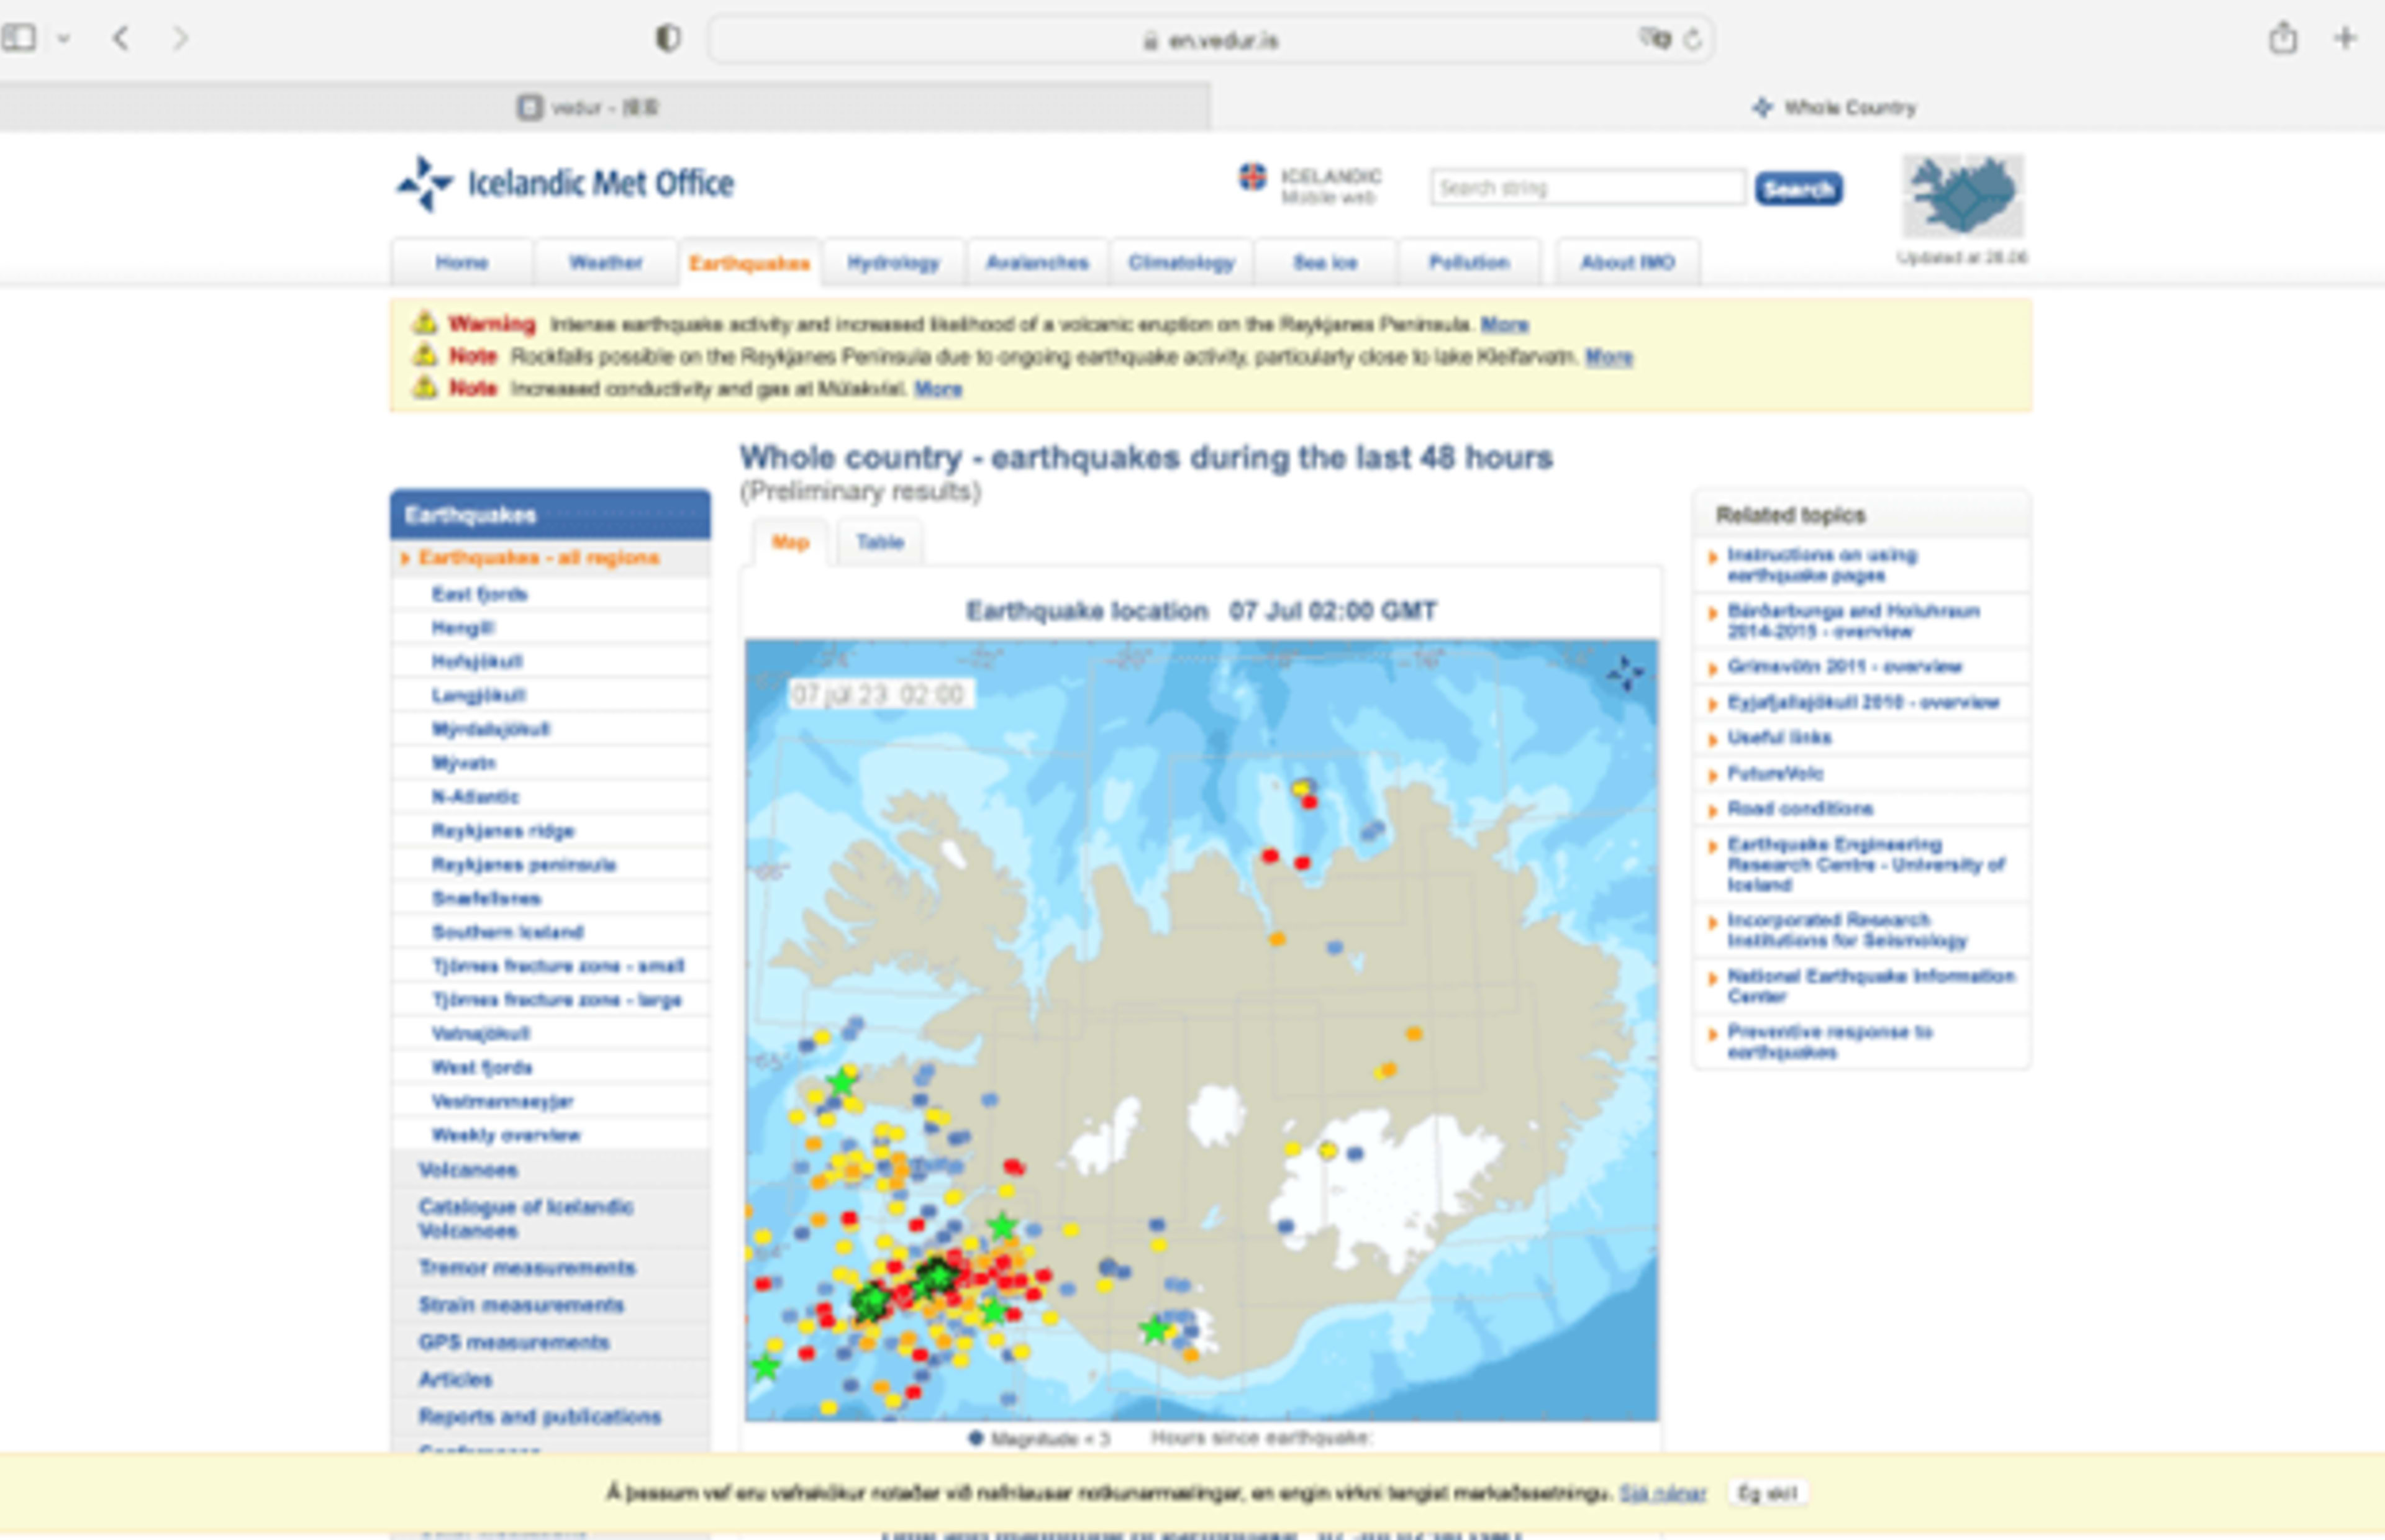 IMO iceland earthquake information website